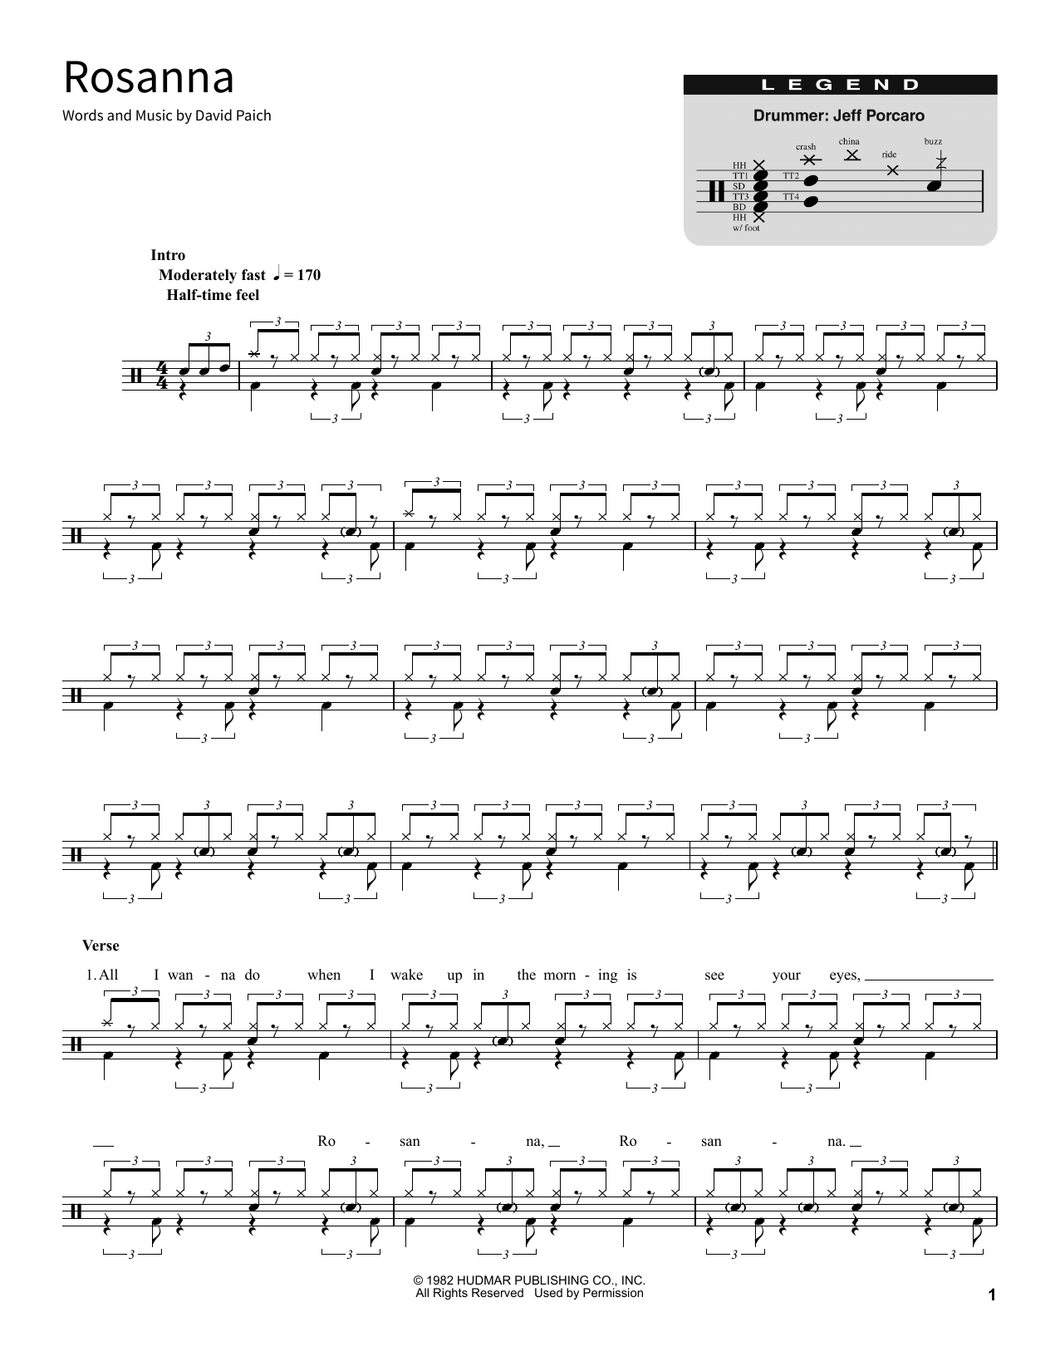 Rosanna - Toto - Full Drum Transcription / Drum Sheet Music - SheetMusicDirect SORD